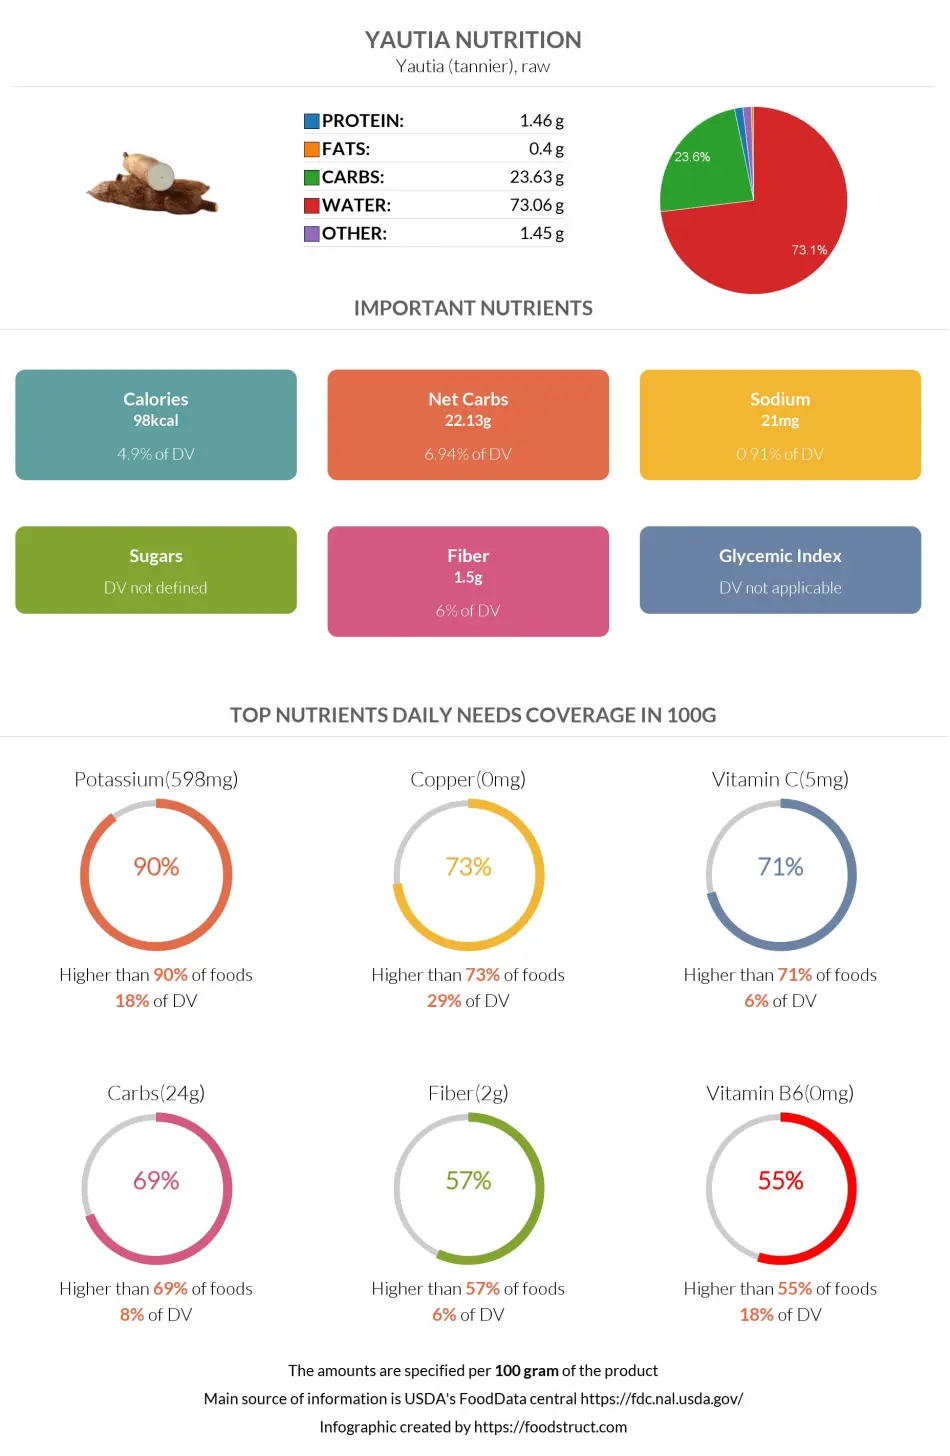 Yautia nutrition infographic